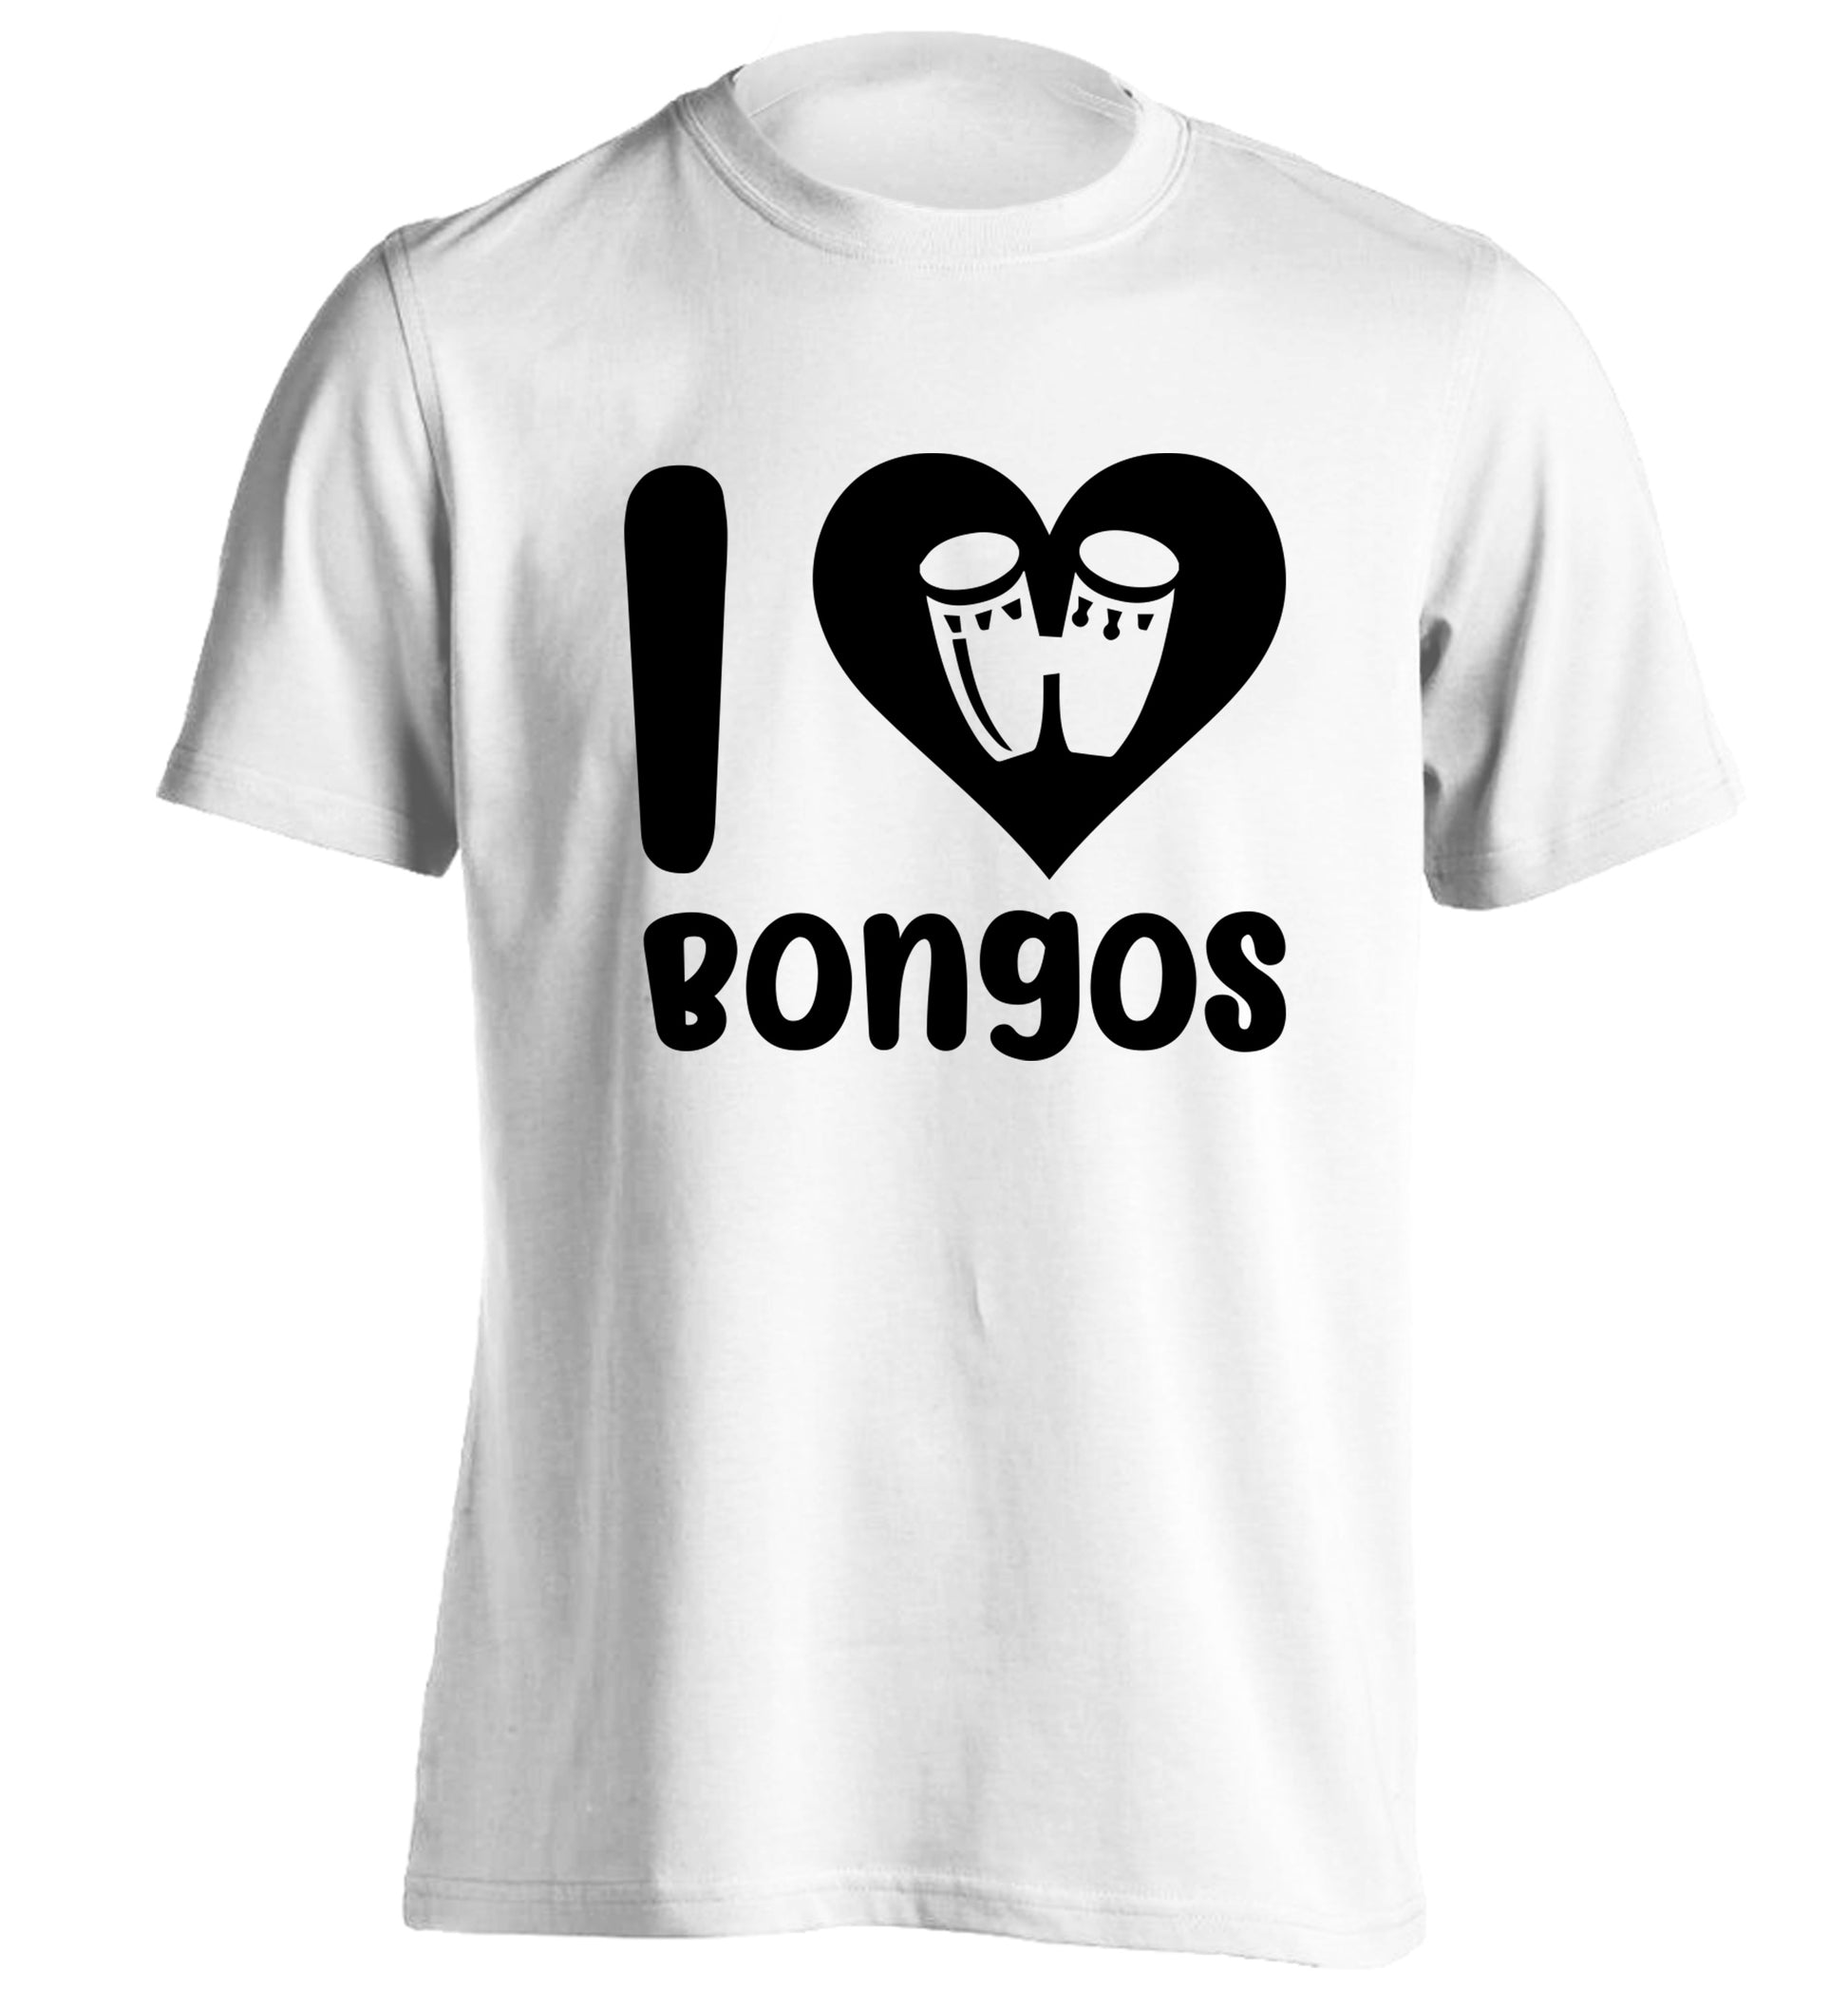 I love bongos adults unisex white Tshirt 2XL